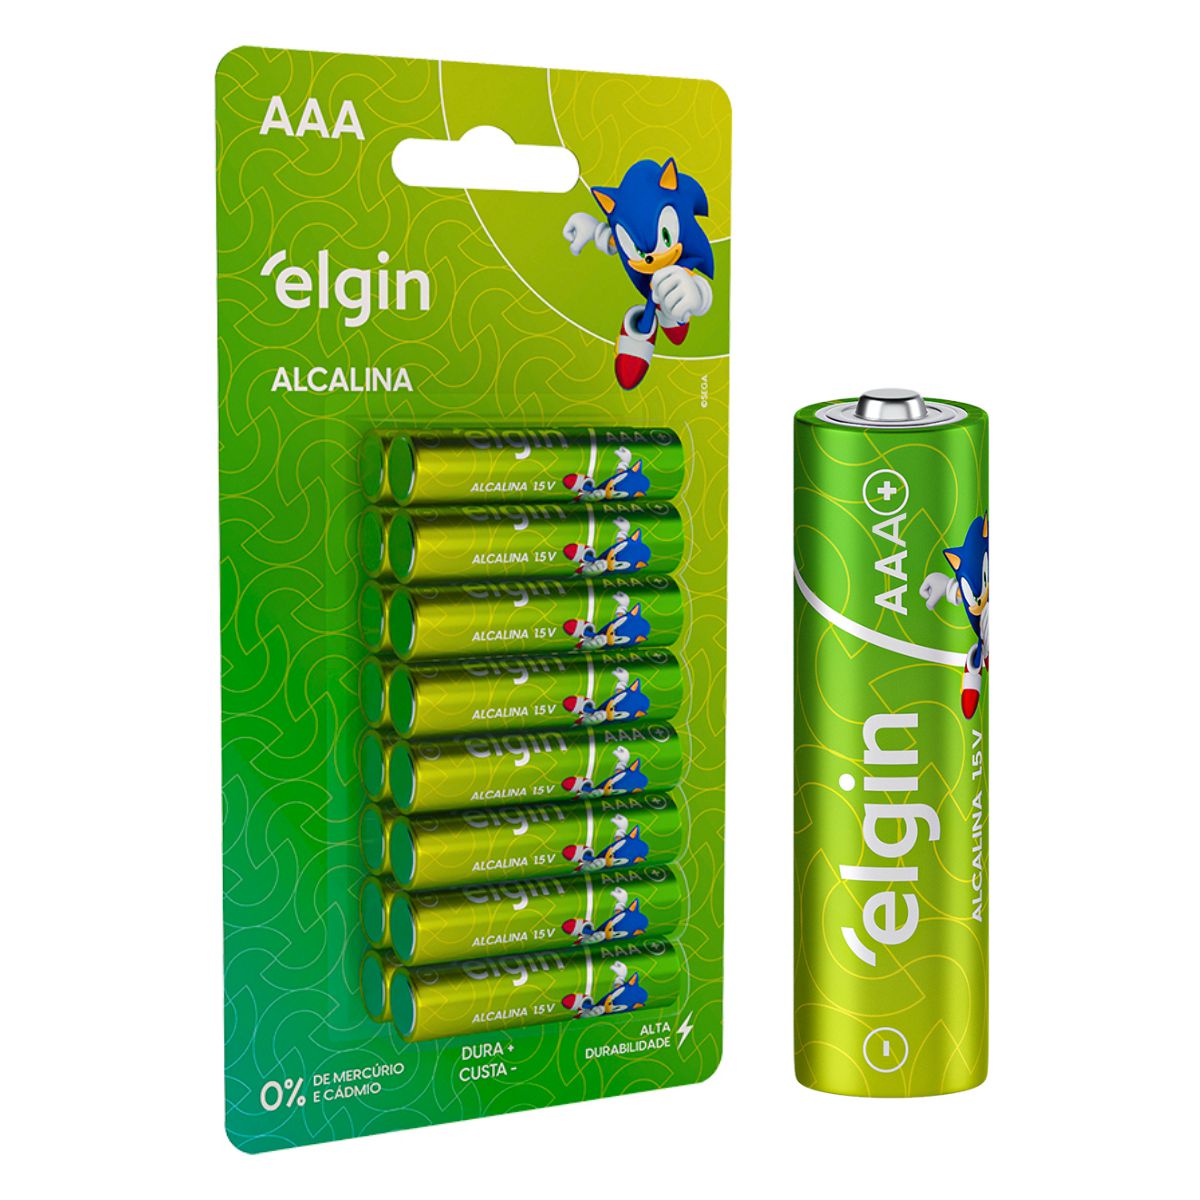 Pilhas Alcalinas AAA Elgin